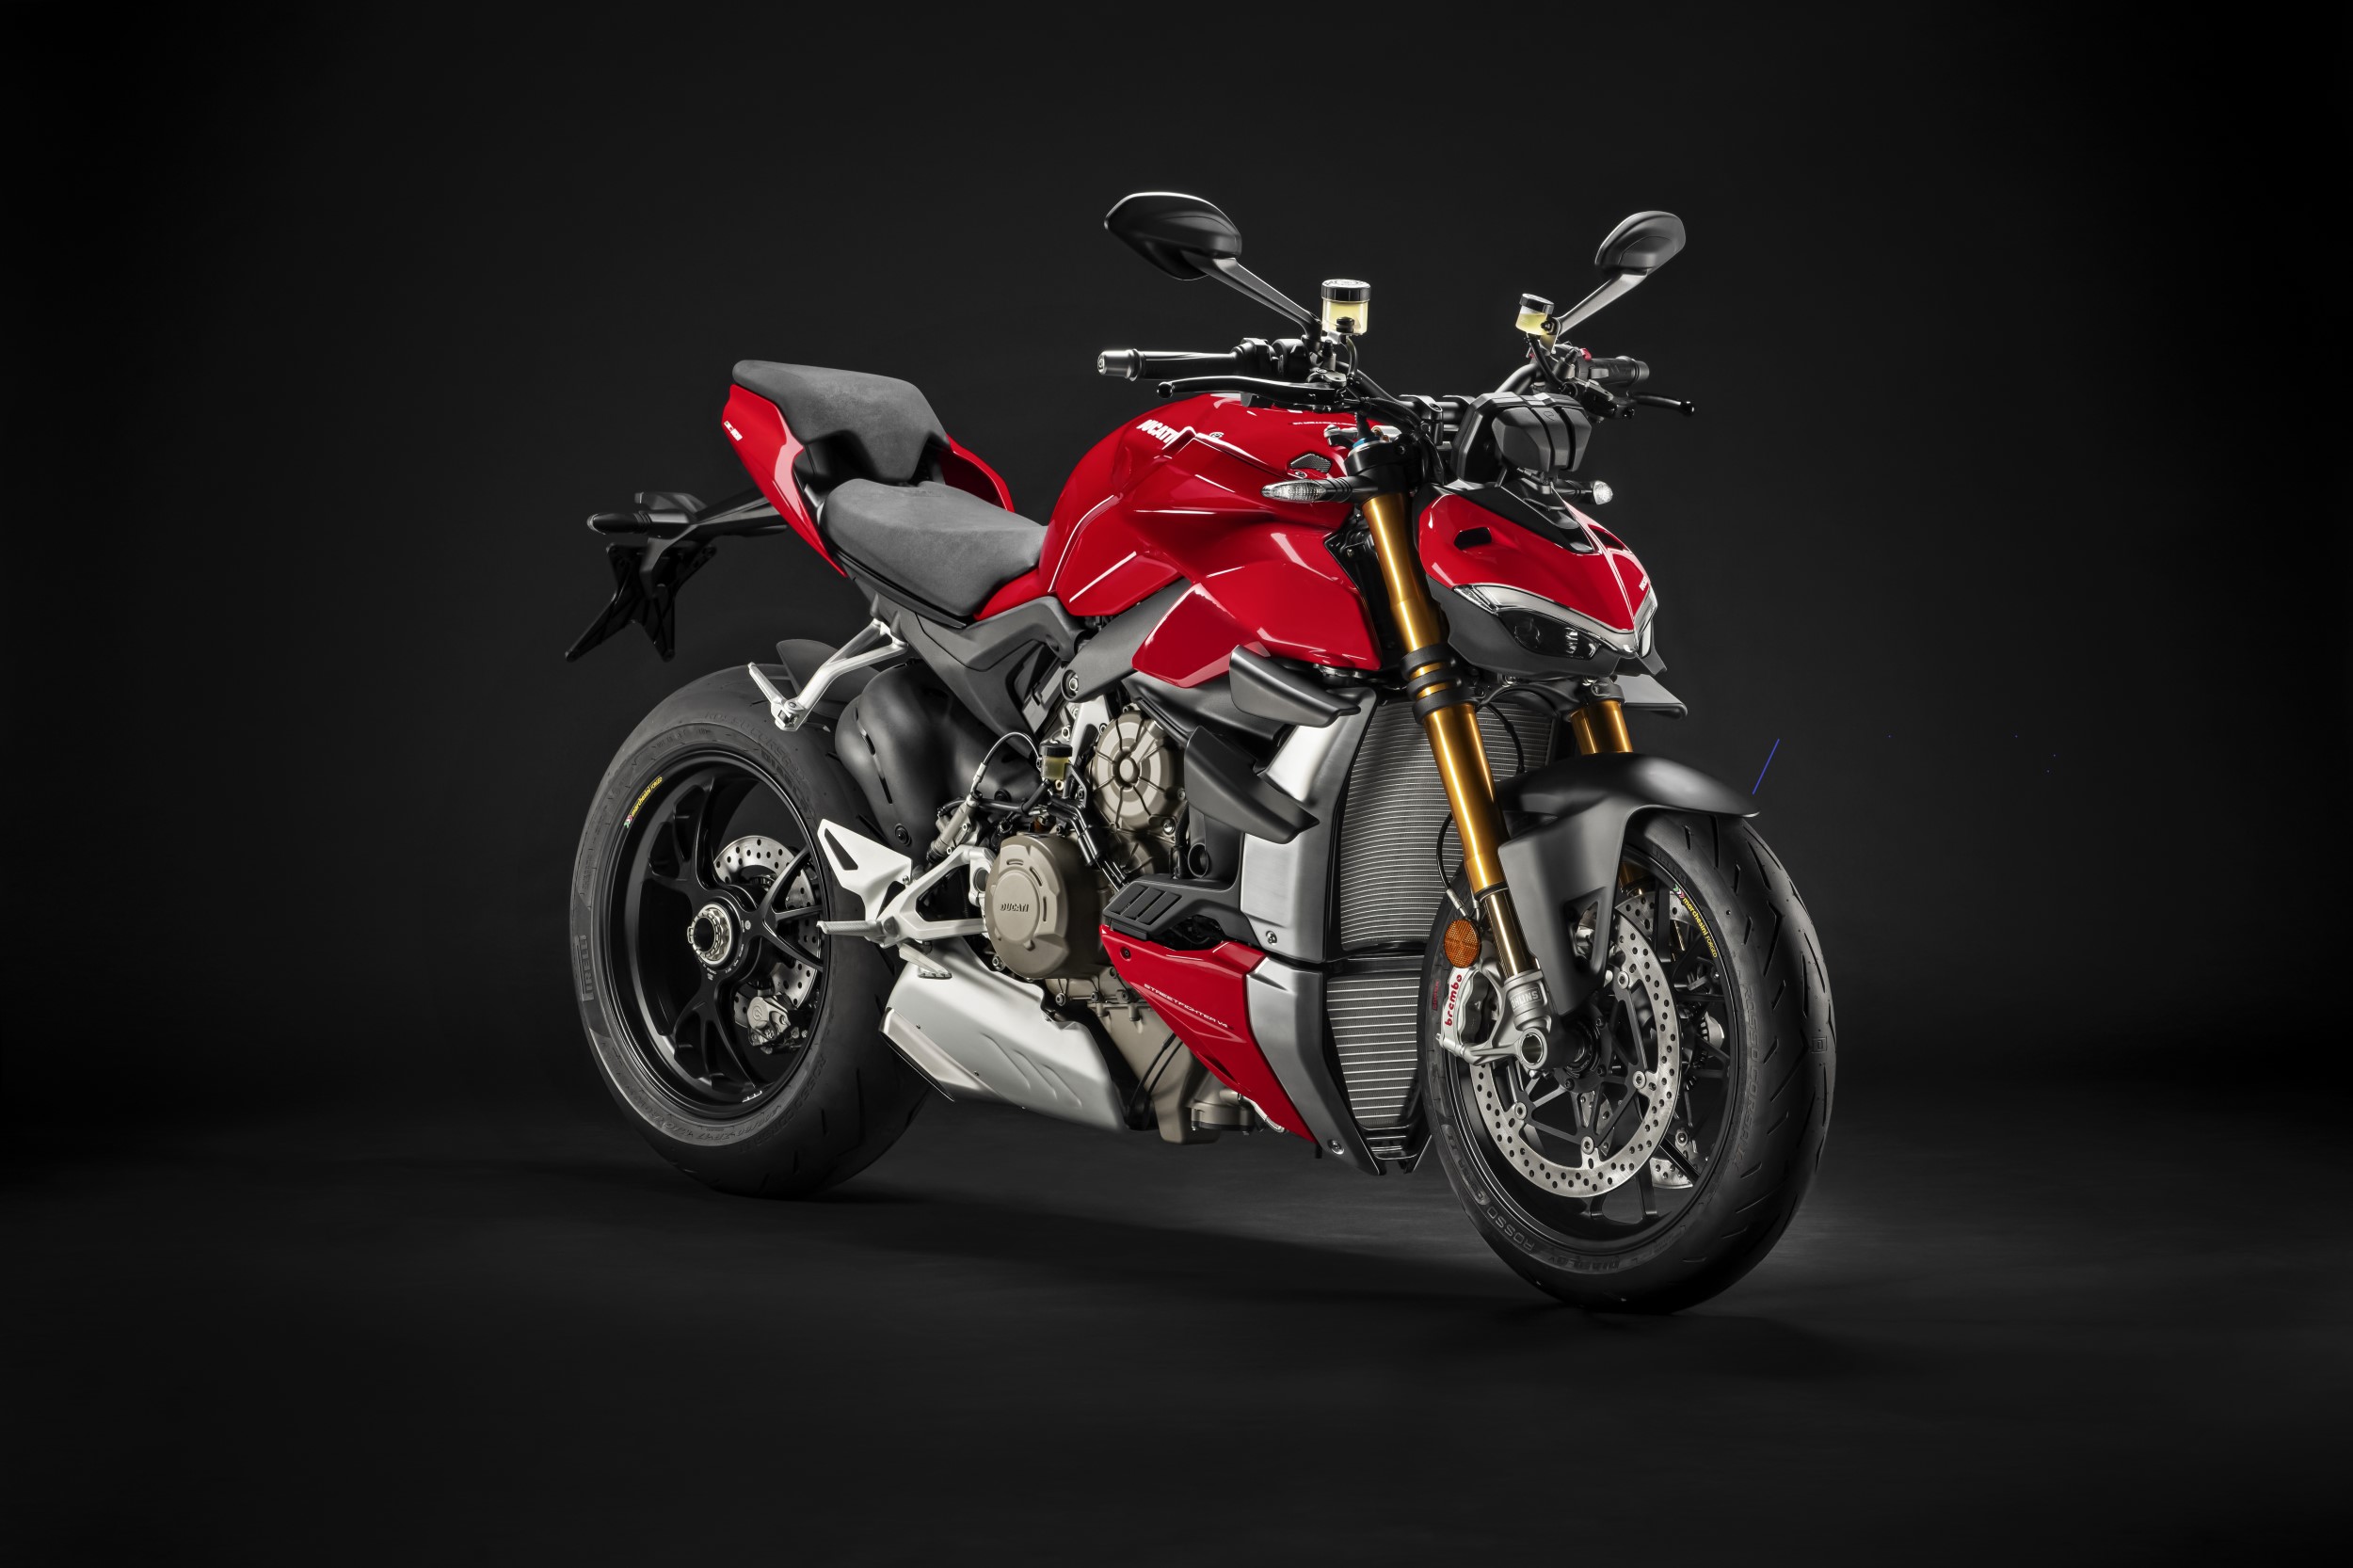 Мотоцикл Ducati Streetfighter V4 завоевал награду «самый красивый мотоцикл»